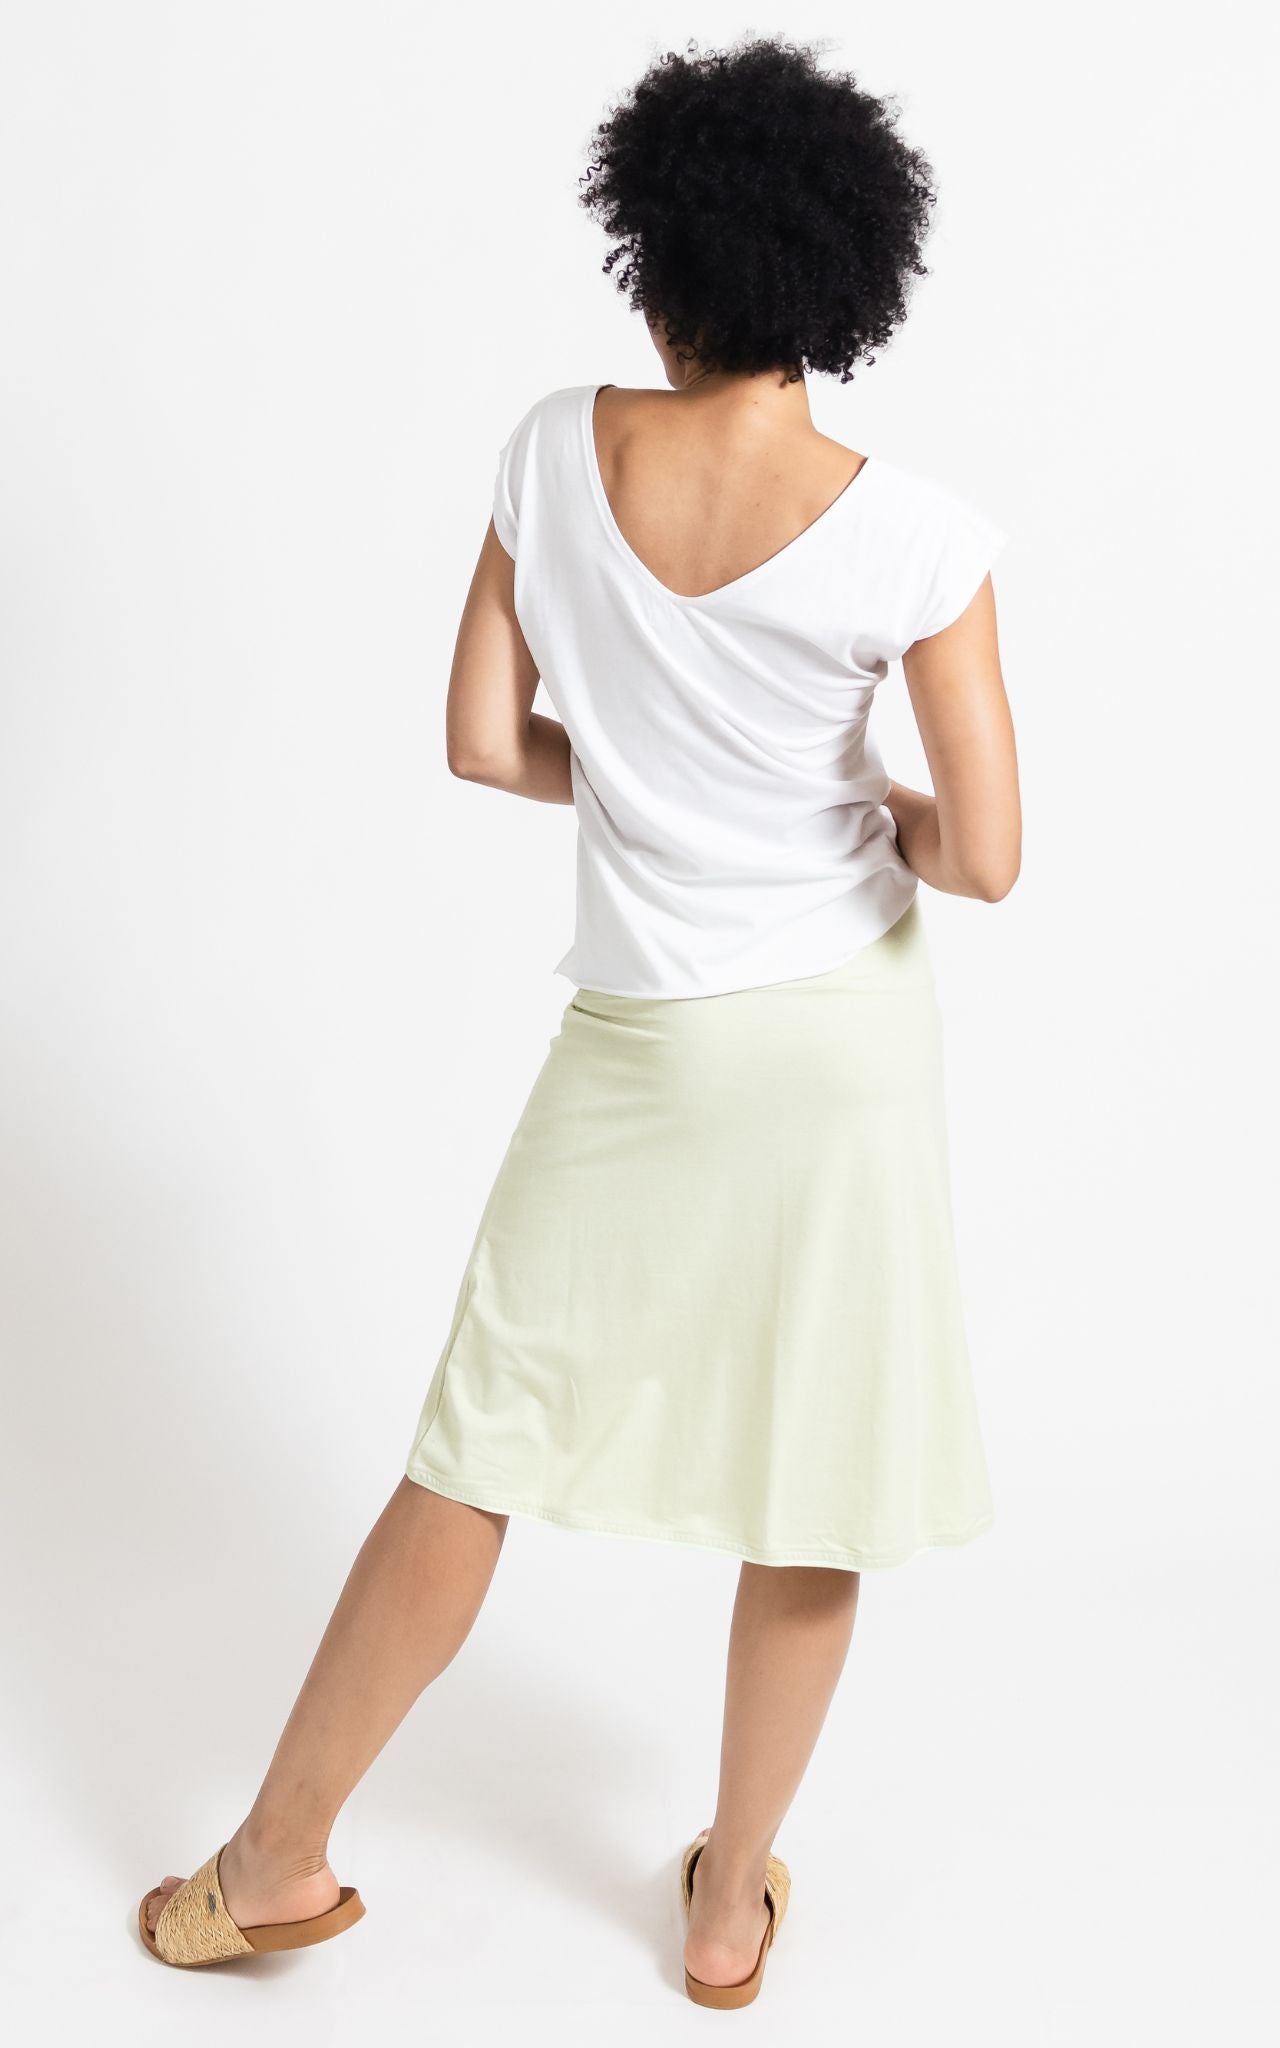 Surya Australia Organic Cotton 'Gaelle' Skirt from Nepal - lime green